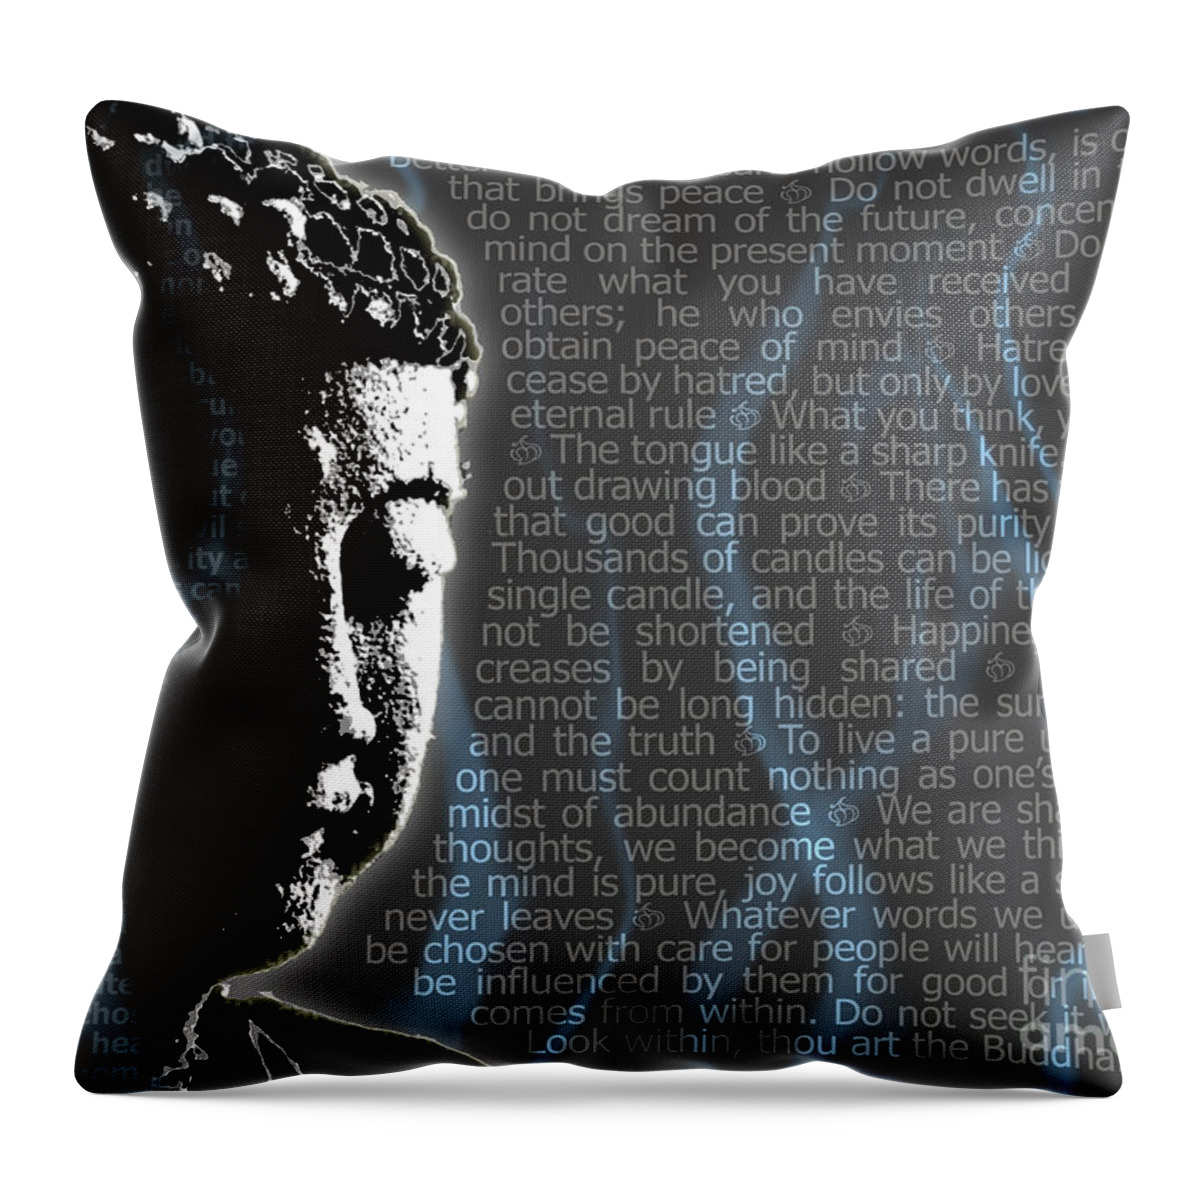 Buddha Throw Pillow featuring the digital art Buddha quotes by Sassan Filsoof